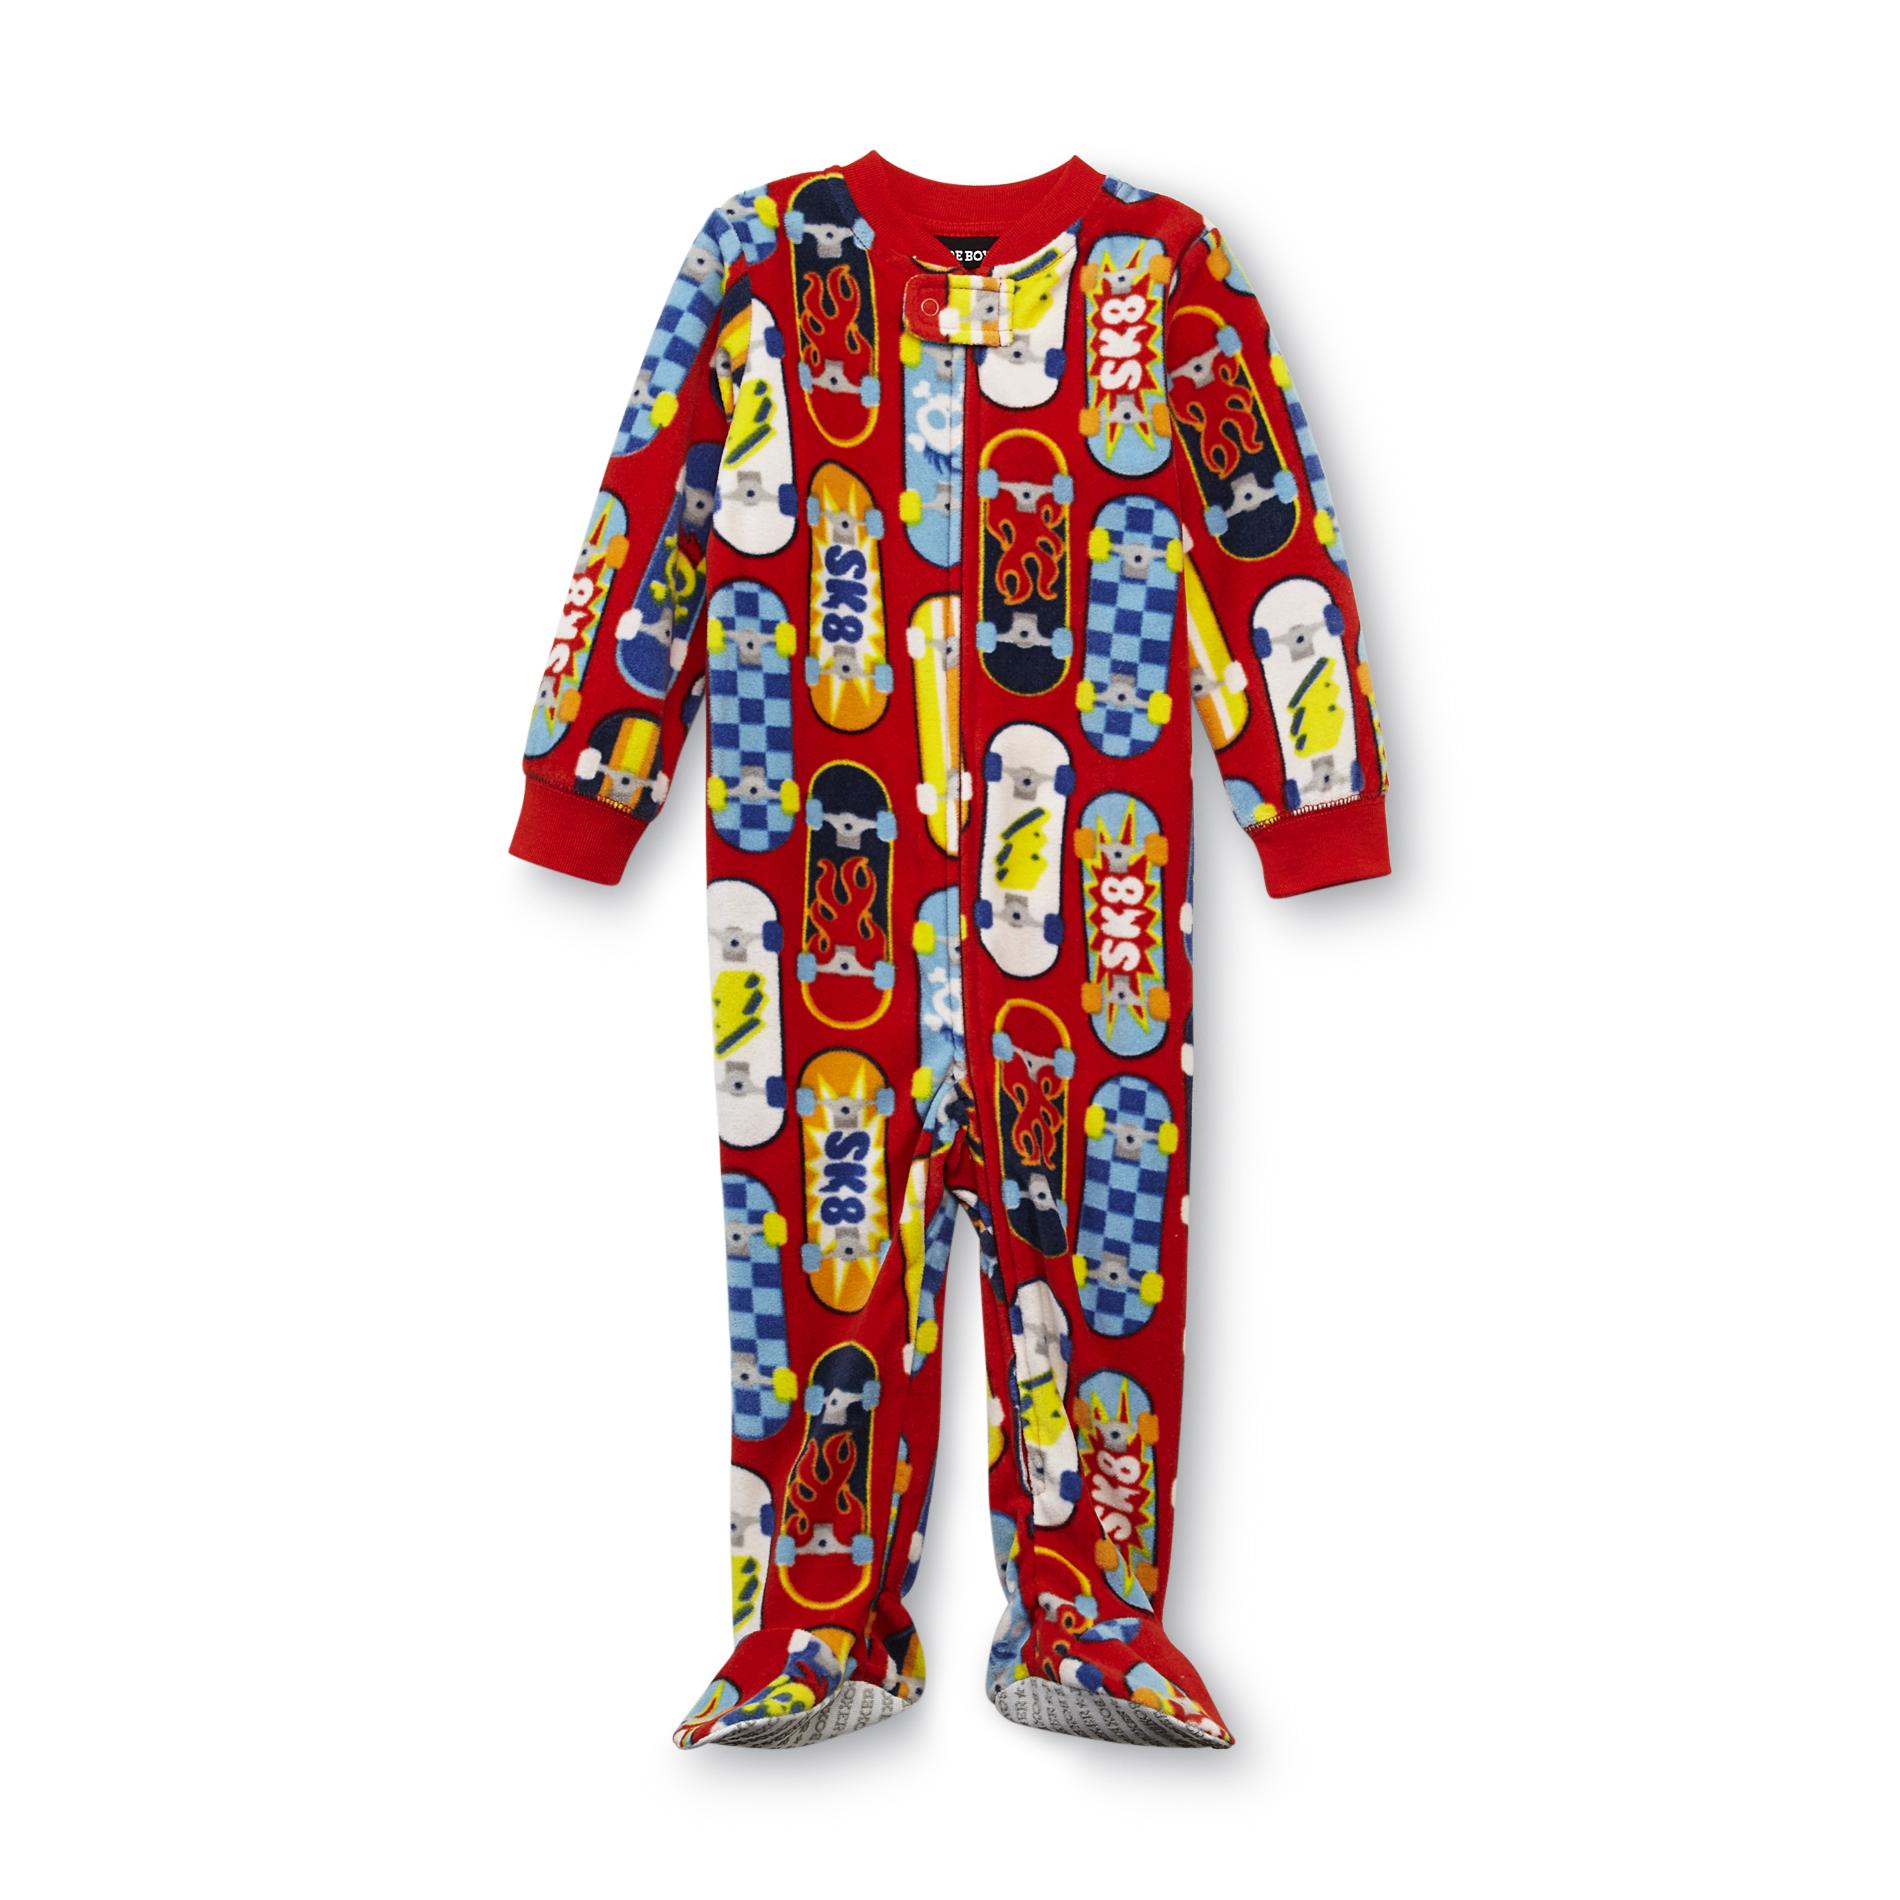 Joe Boxer Infant & Toddler Boy's Footed Sleeper Pajamas - Skateboard